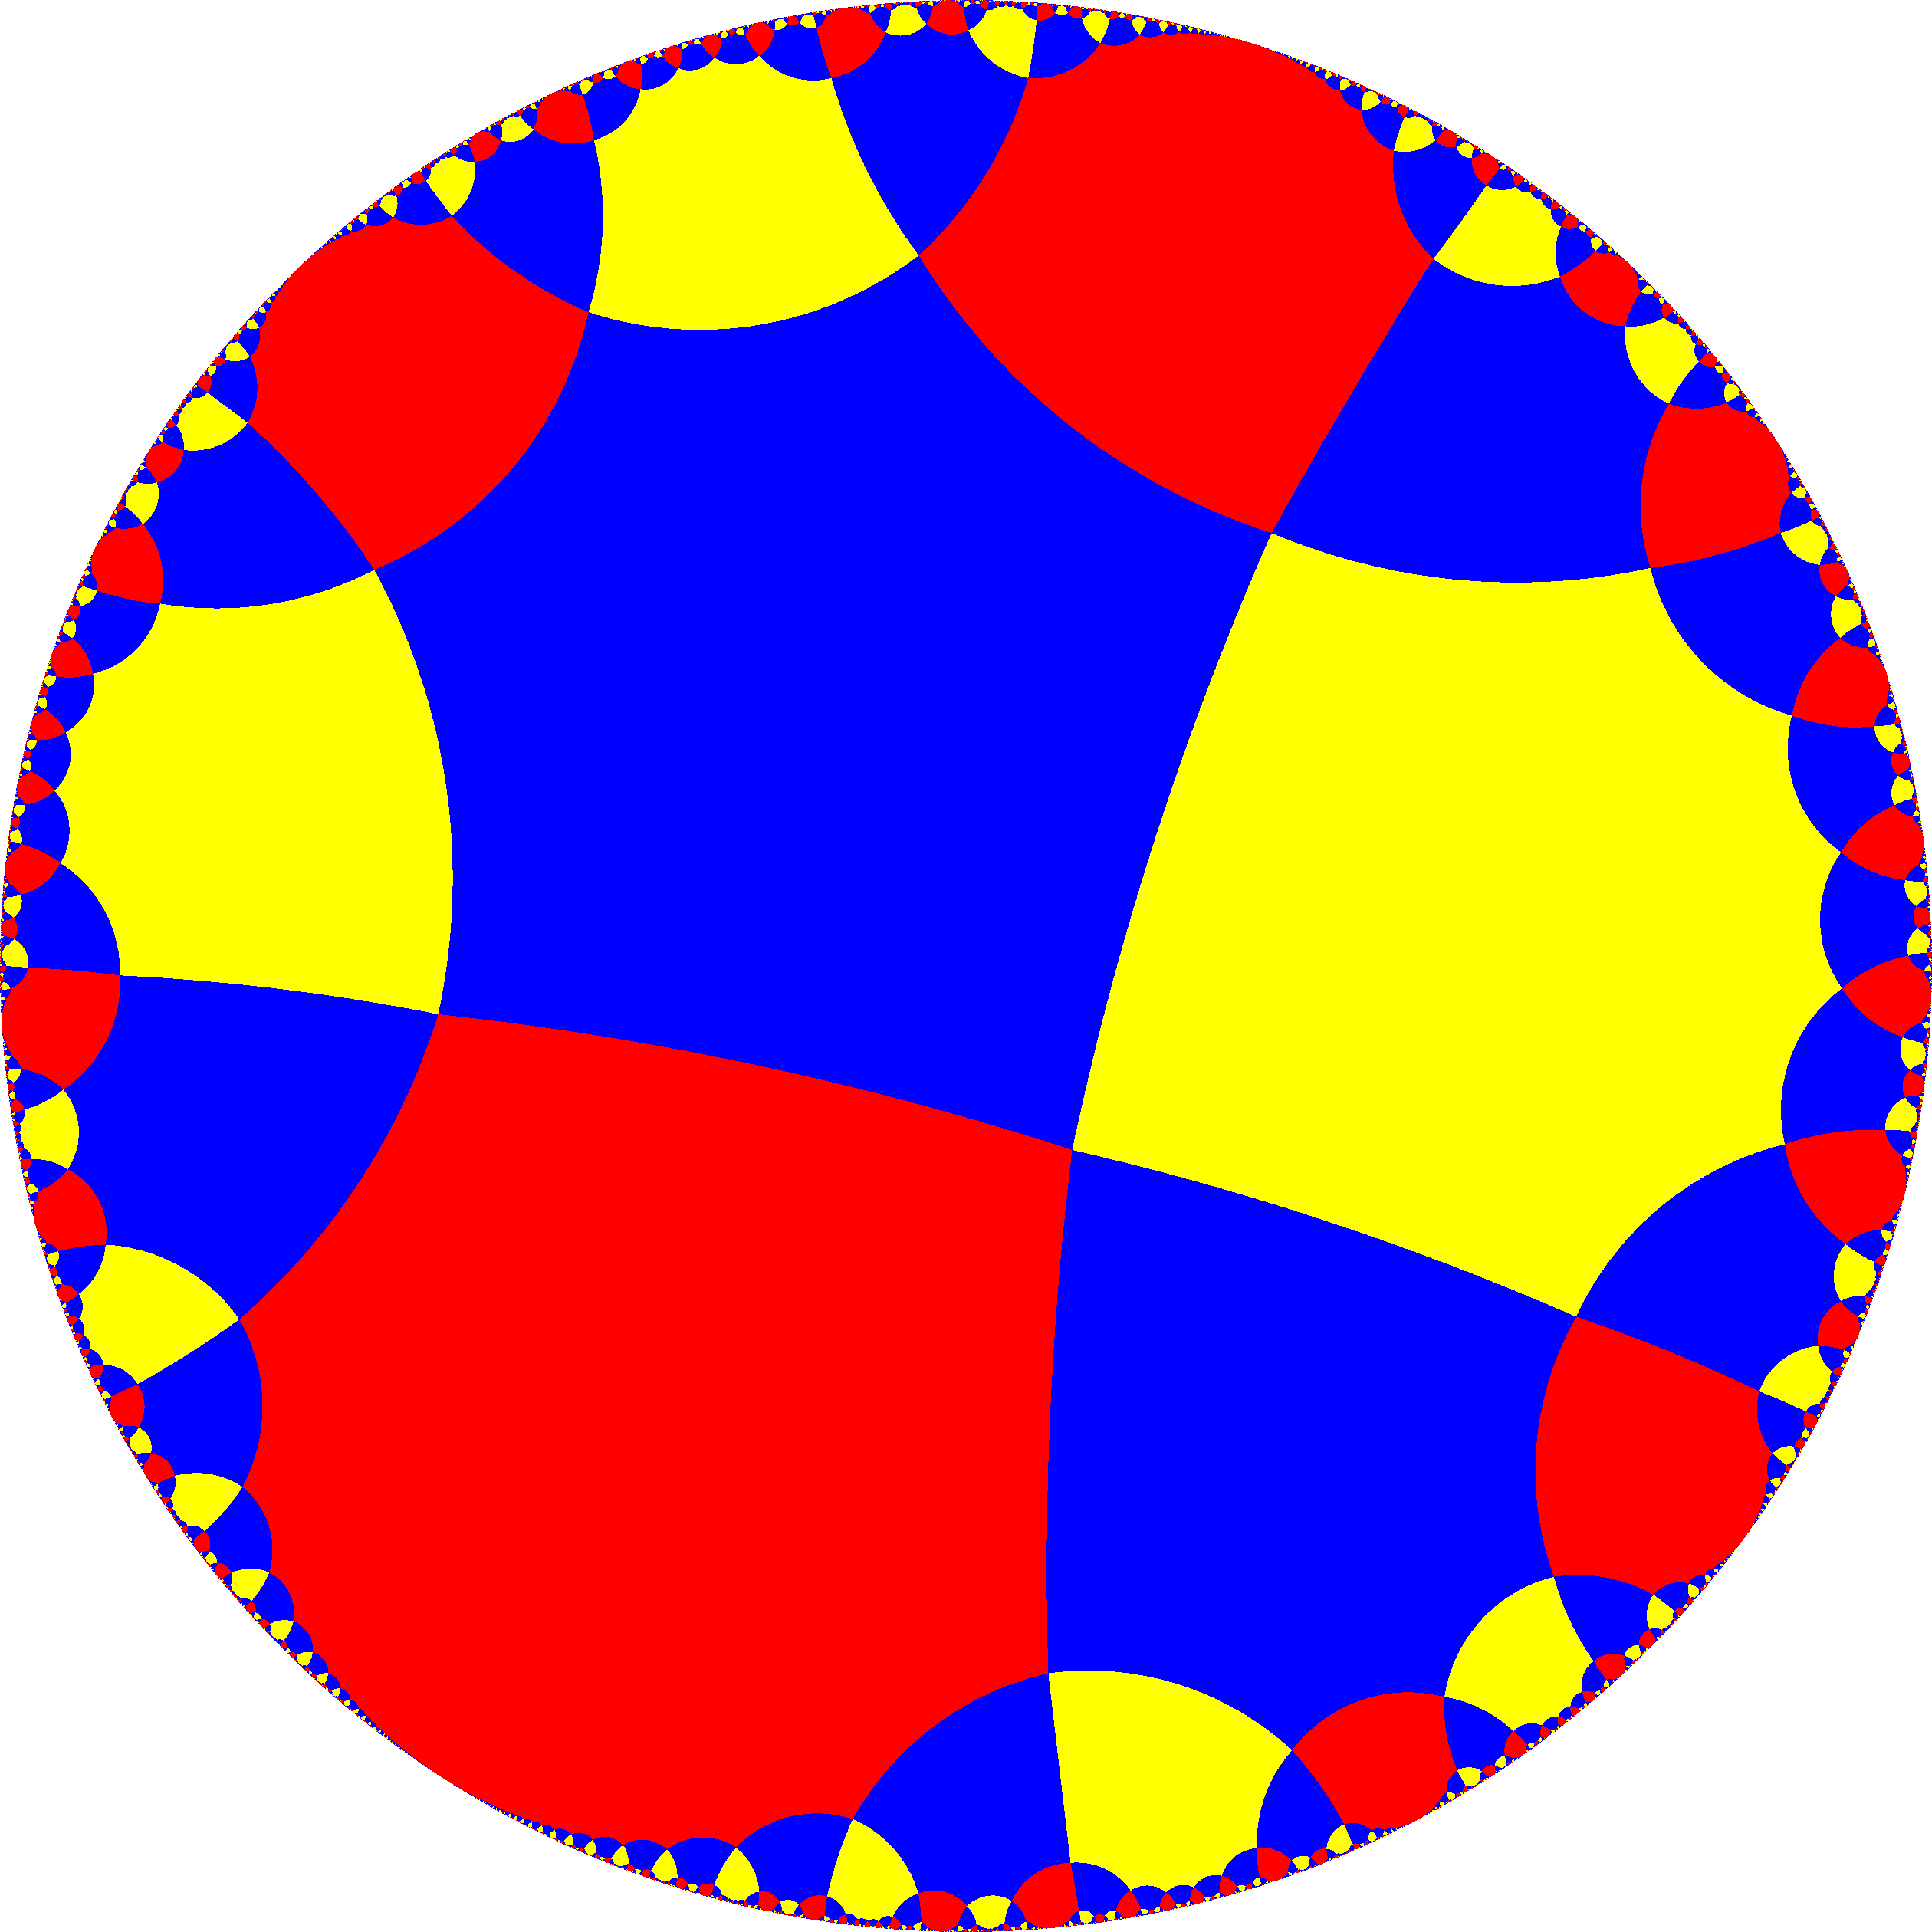 File:H2 tiling 38i-5.png - Wikipedia